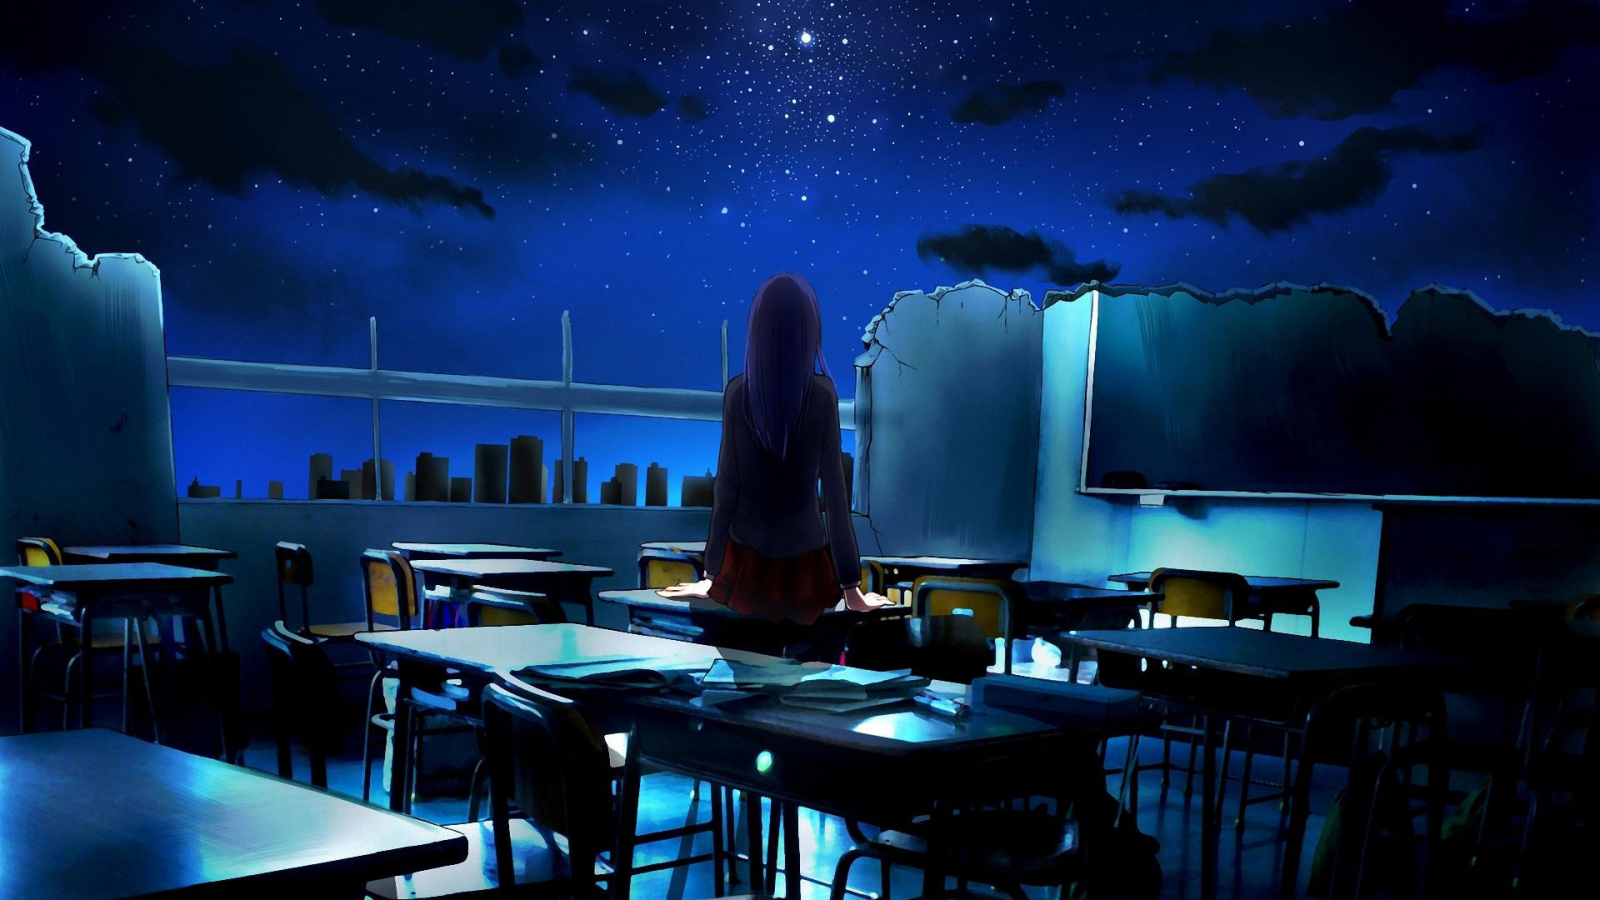 Download wallpaper 1600x900 open, classroom, anime girl, night, original,  16:9 widescreen 1600x900 hd background, 8801